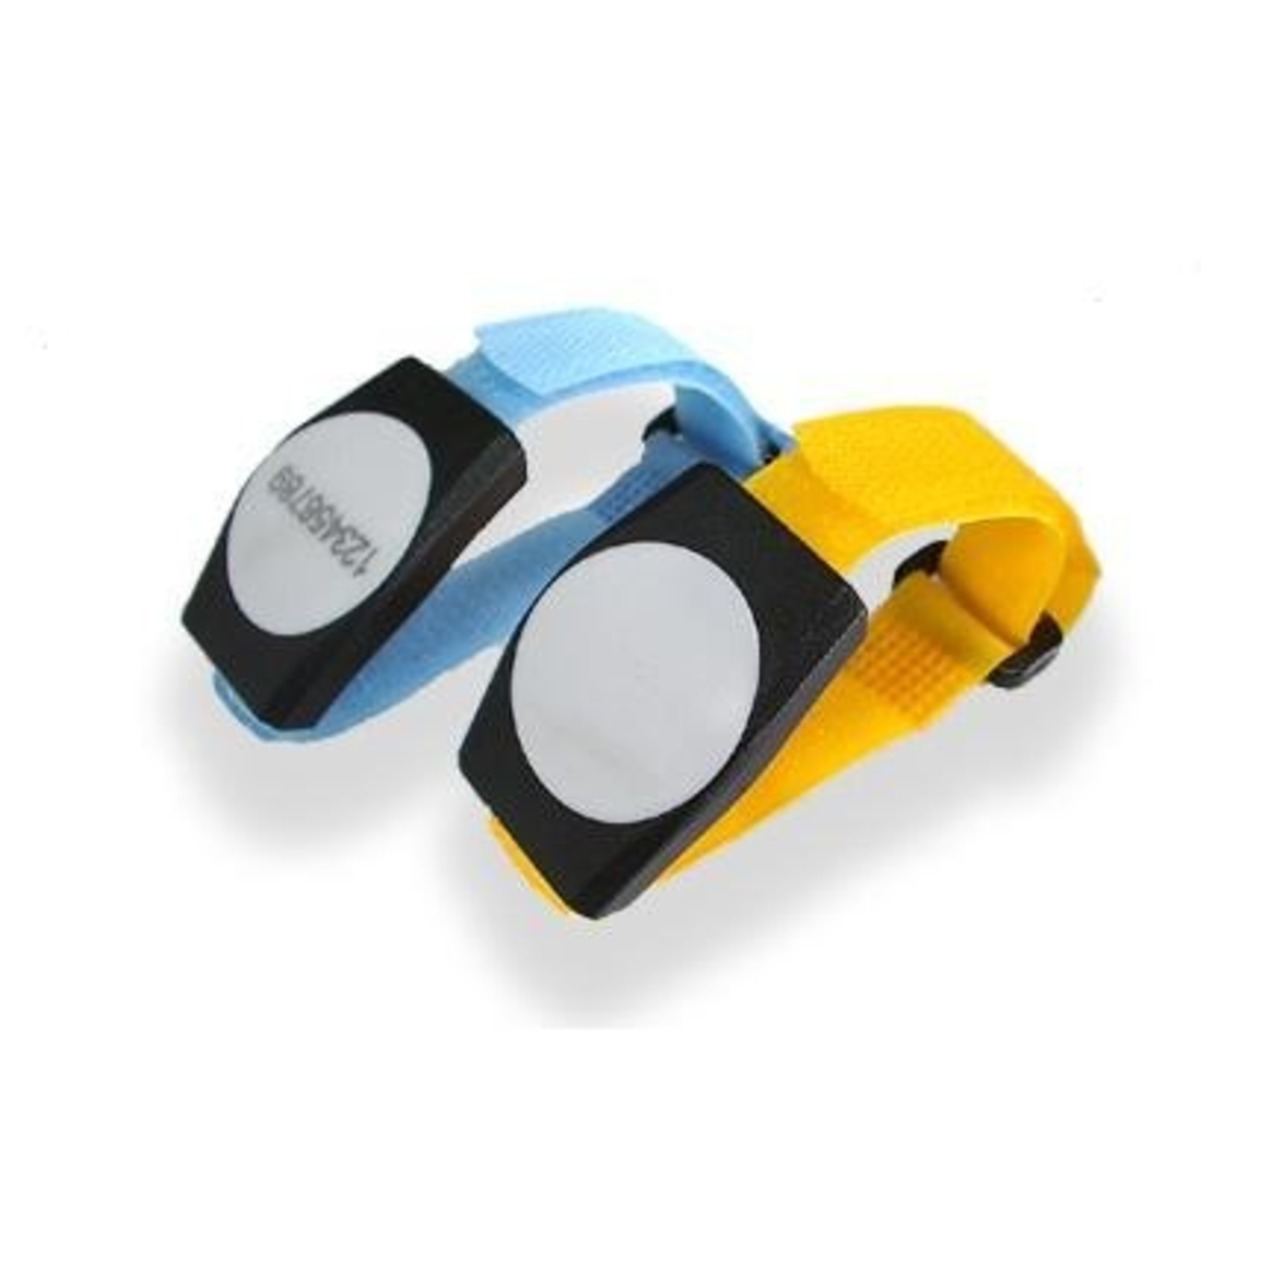 Velcro NFC Wristband